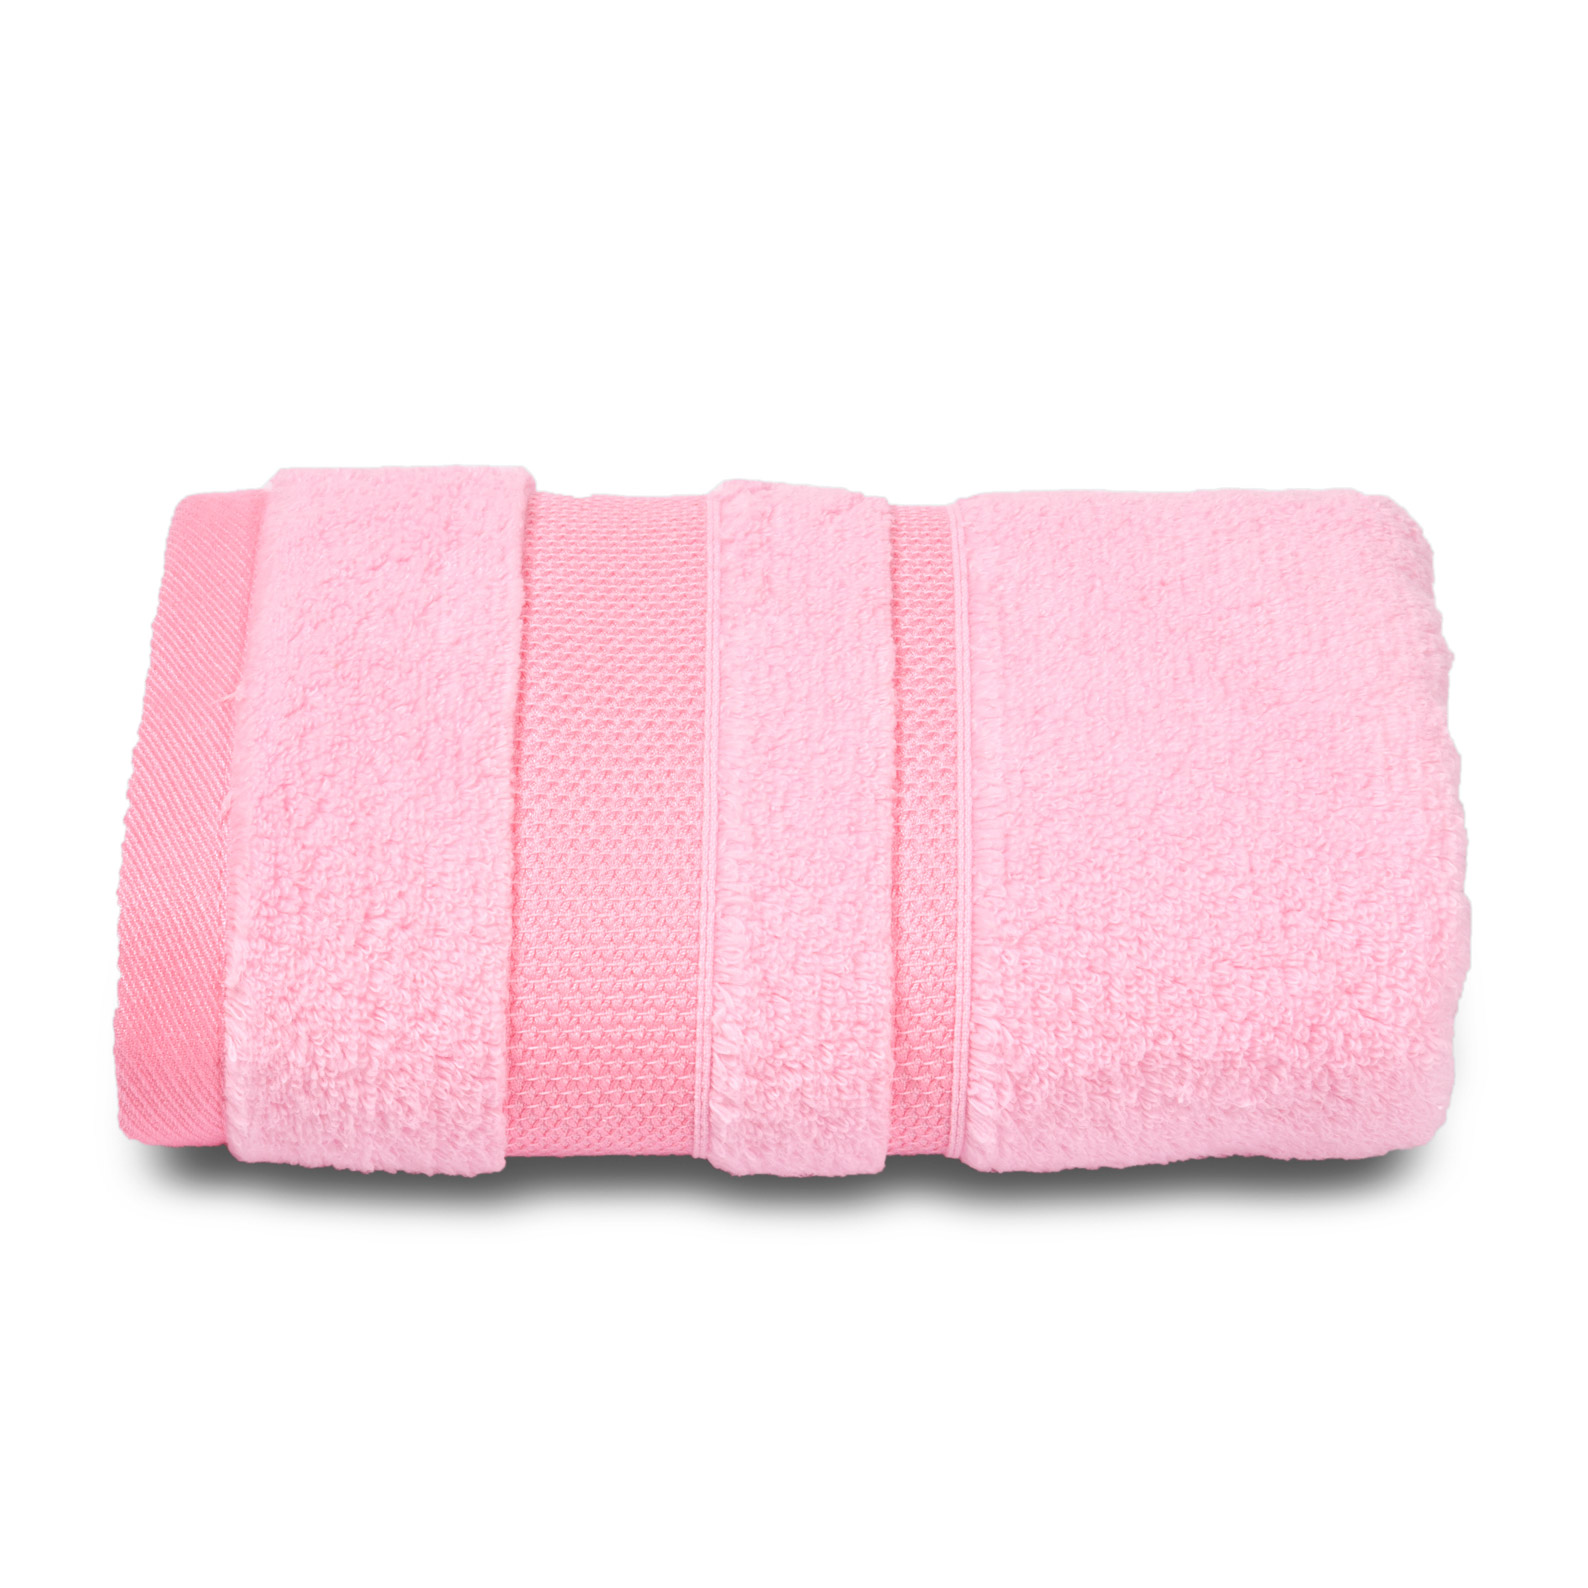 Полотенце махровое Cleanelly perfetto твист 50х100 розовый полотенце махровое cleanelly торта 50х100 гладкокрашенное с эффектом велюра